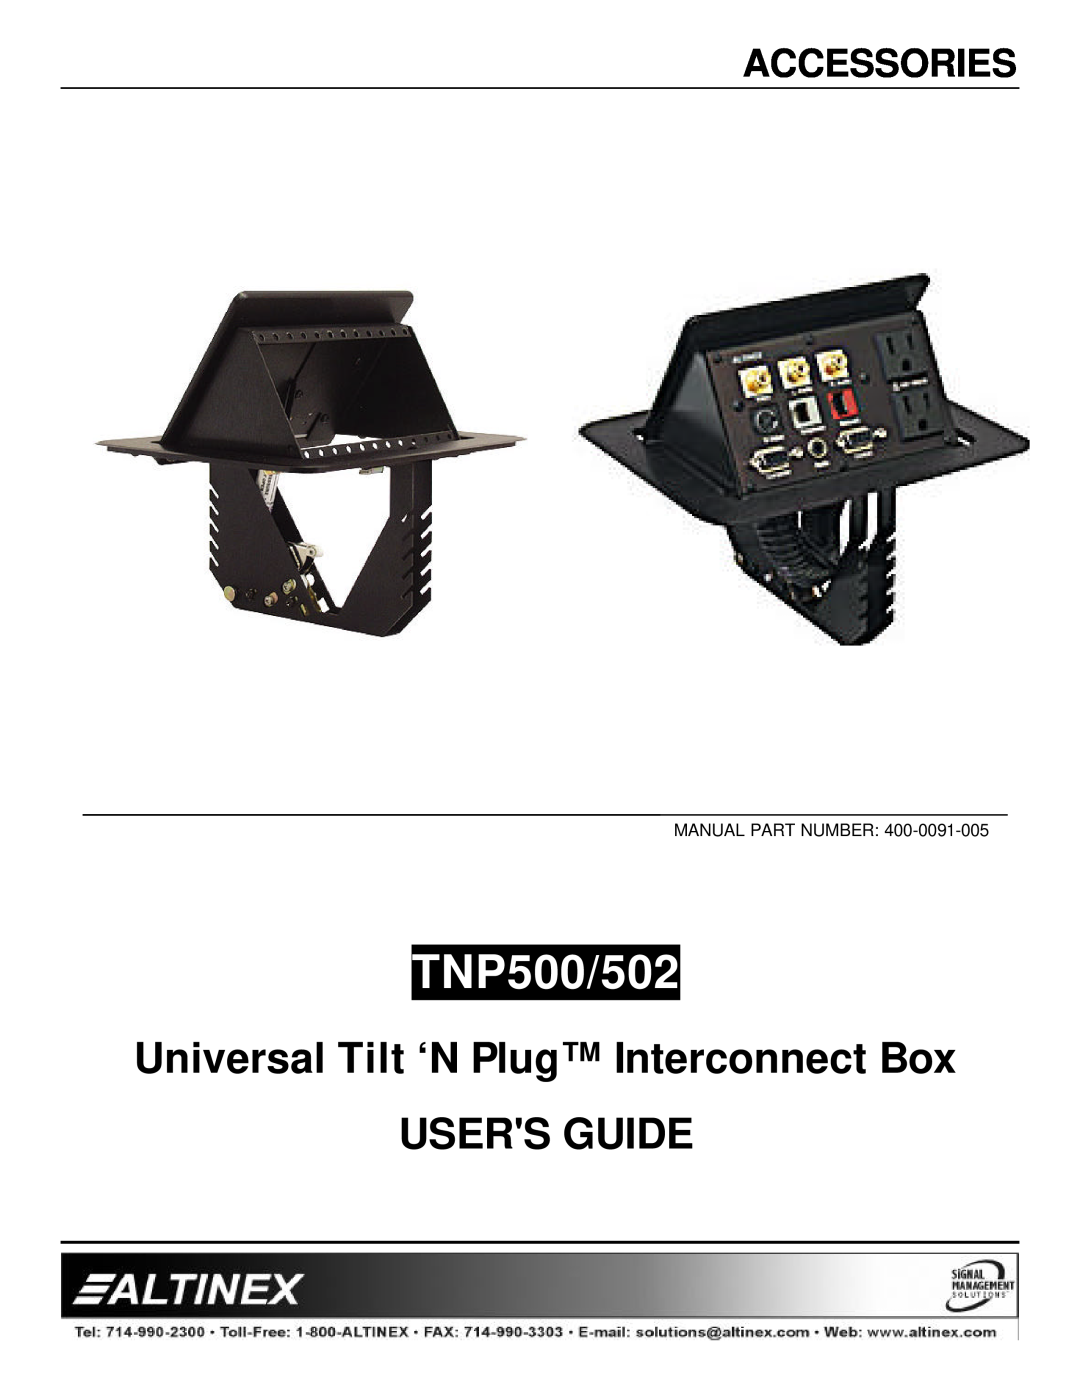 Altinex TNP500/502 manual Accessories, Universal Tilt ‘N Plug Interconnect Box USERS GUIDE 